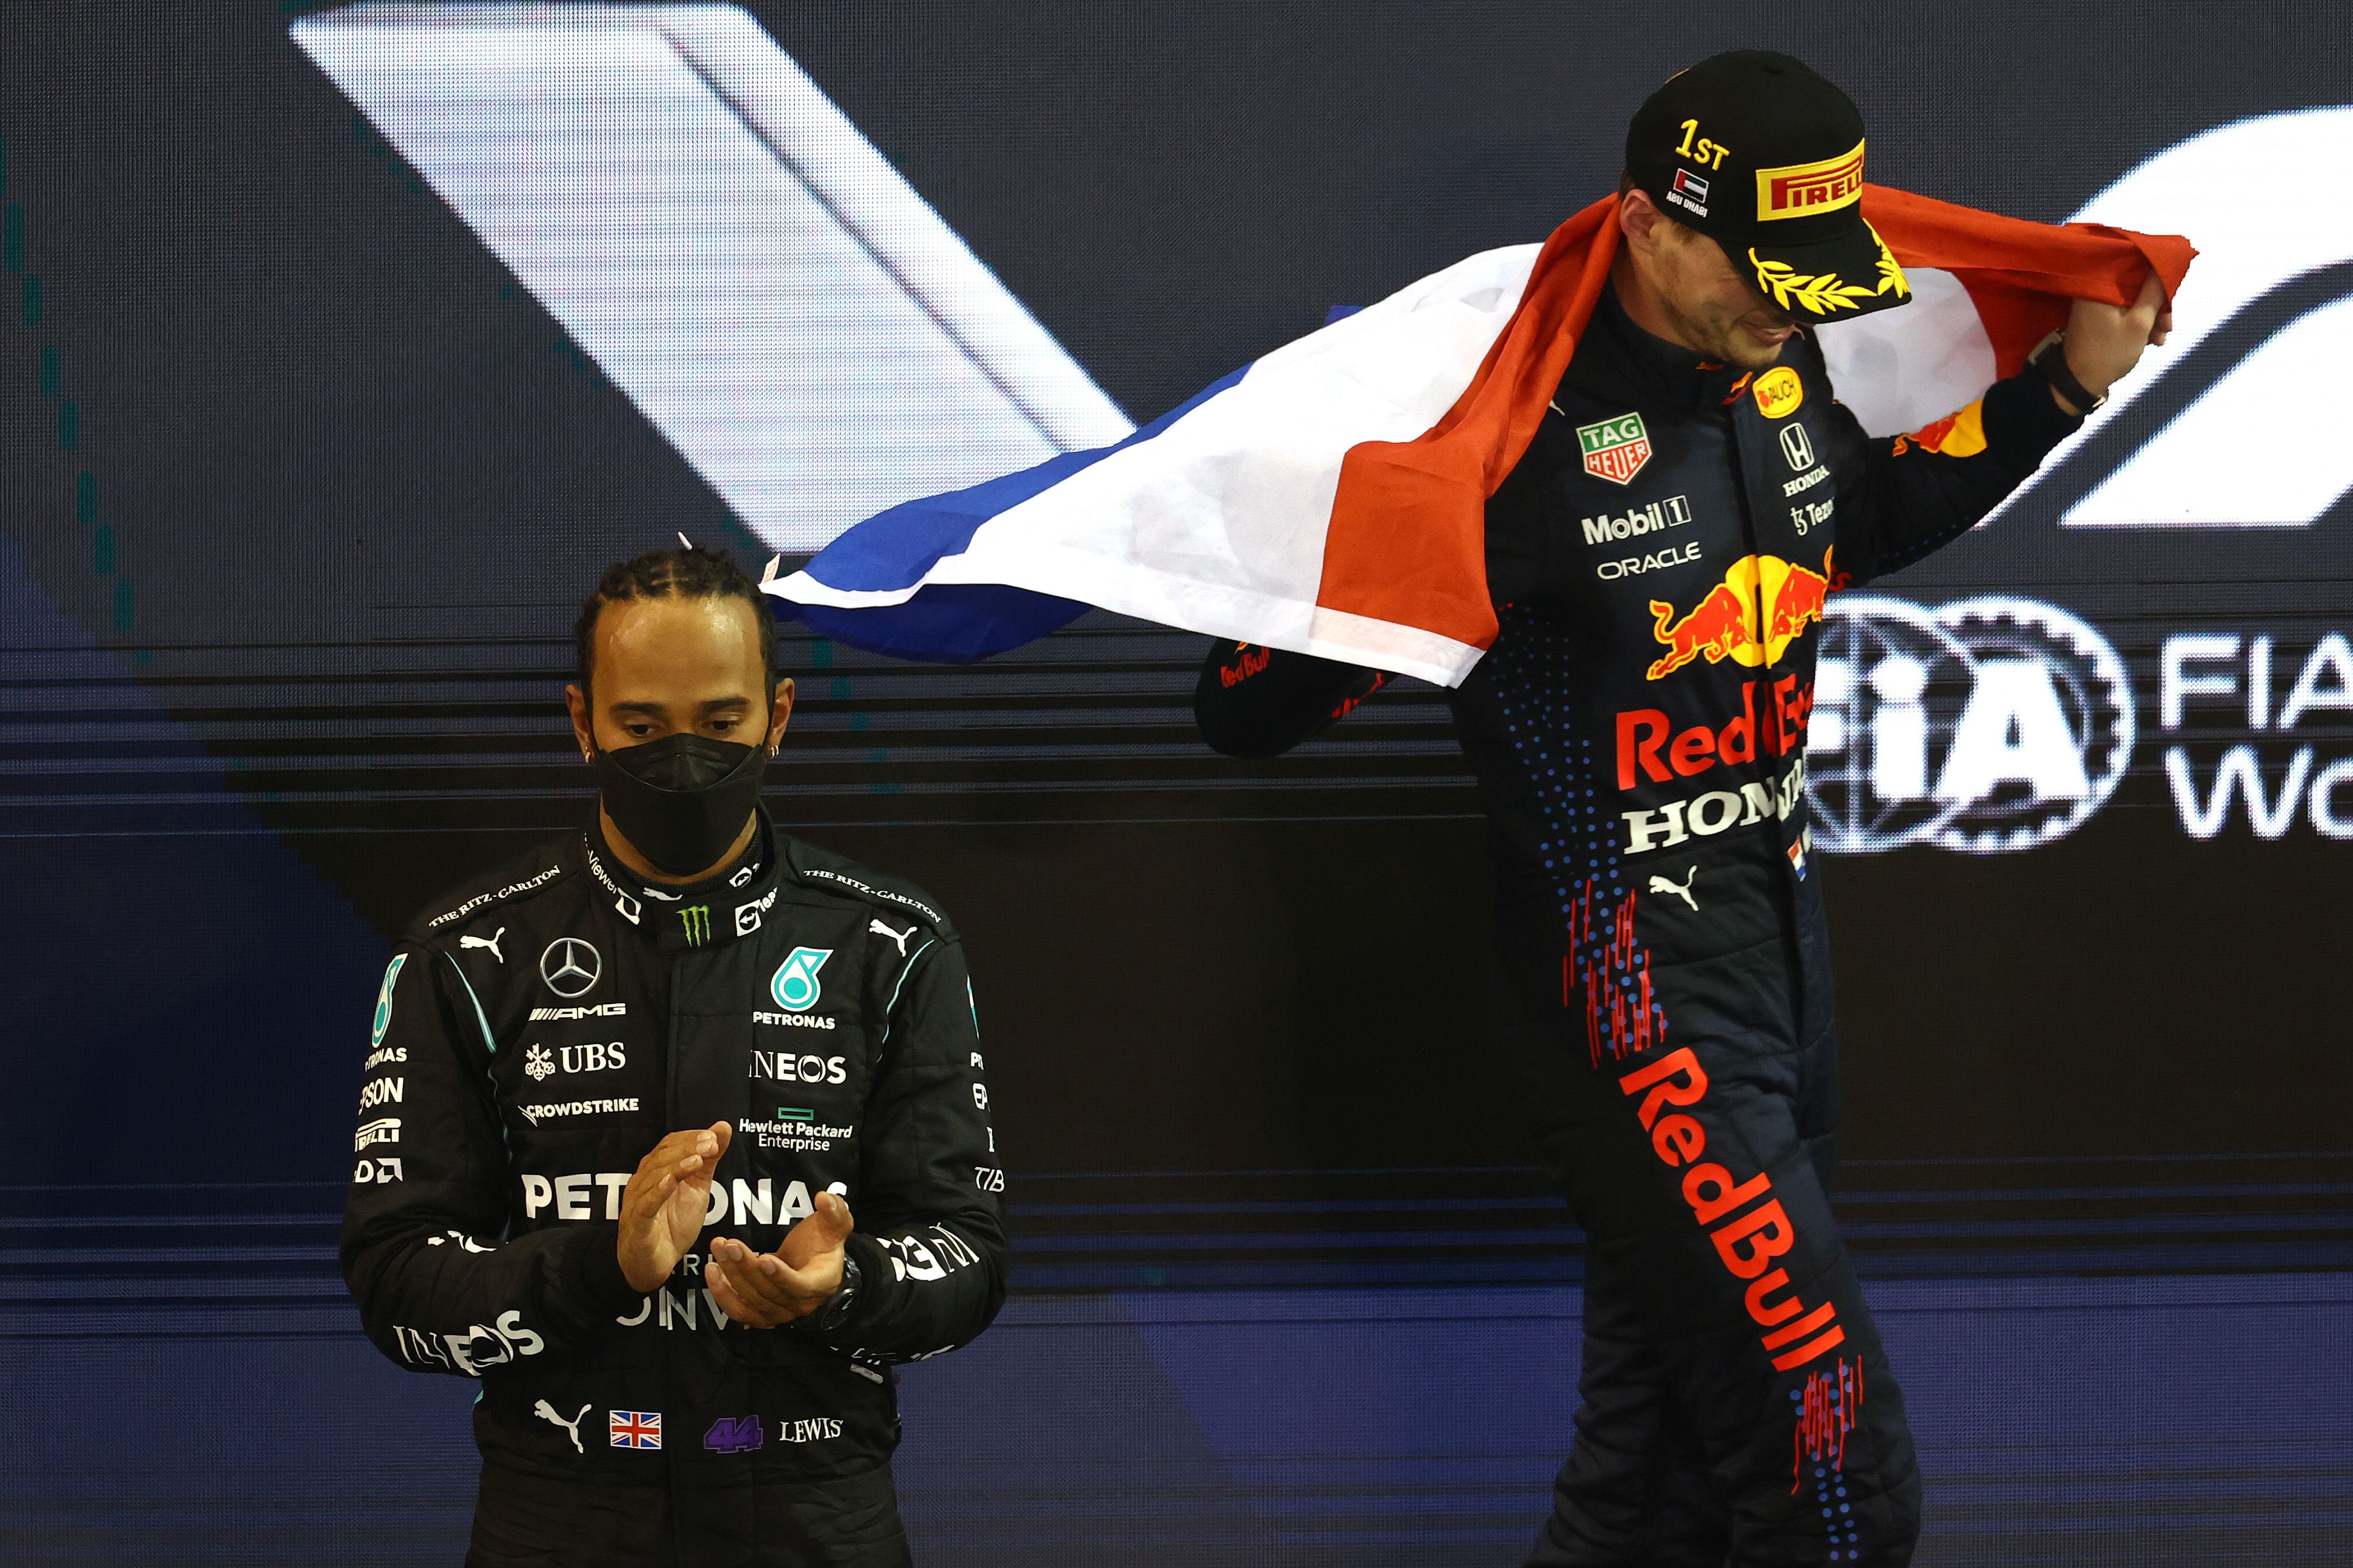 Hamilton &amp; Verstappen at Abu Dhabi GP